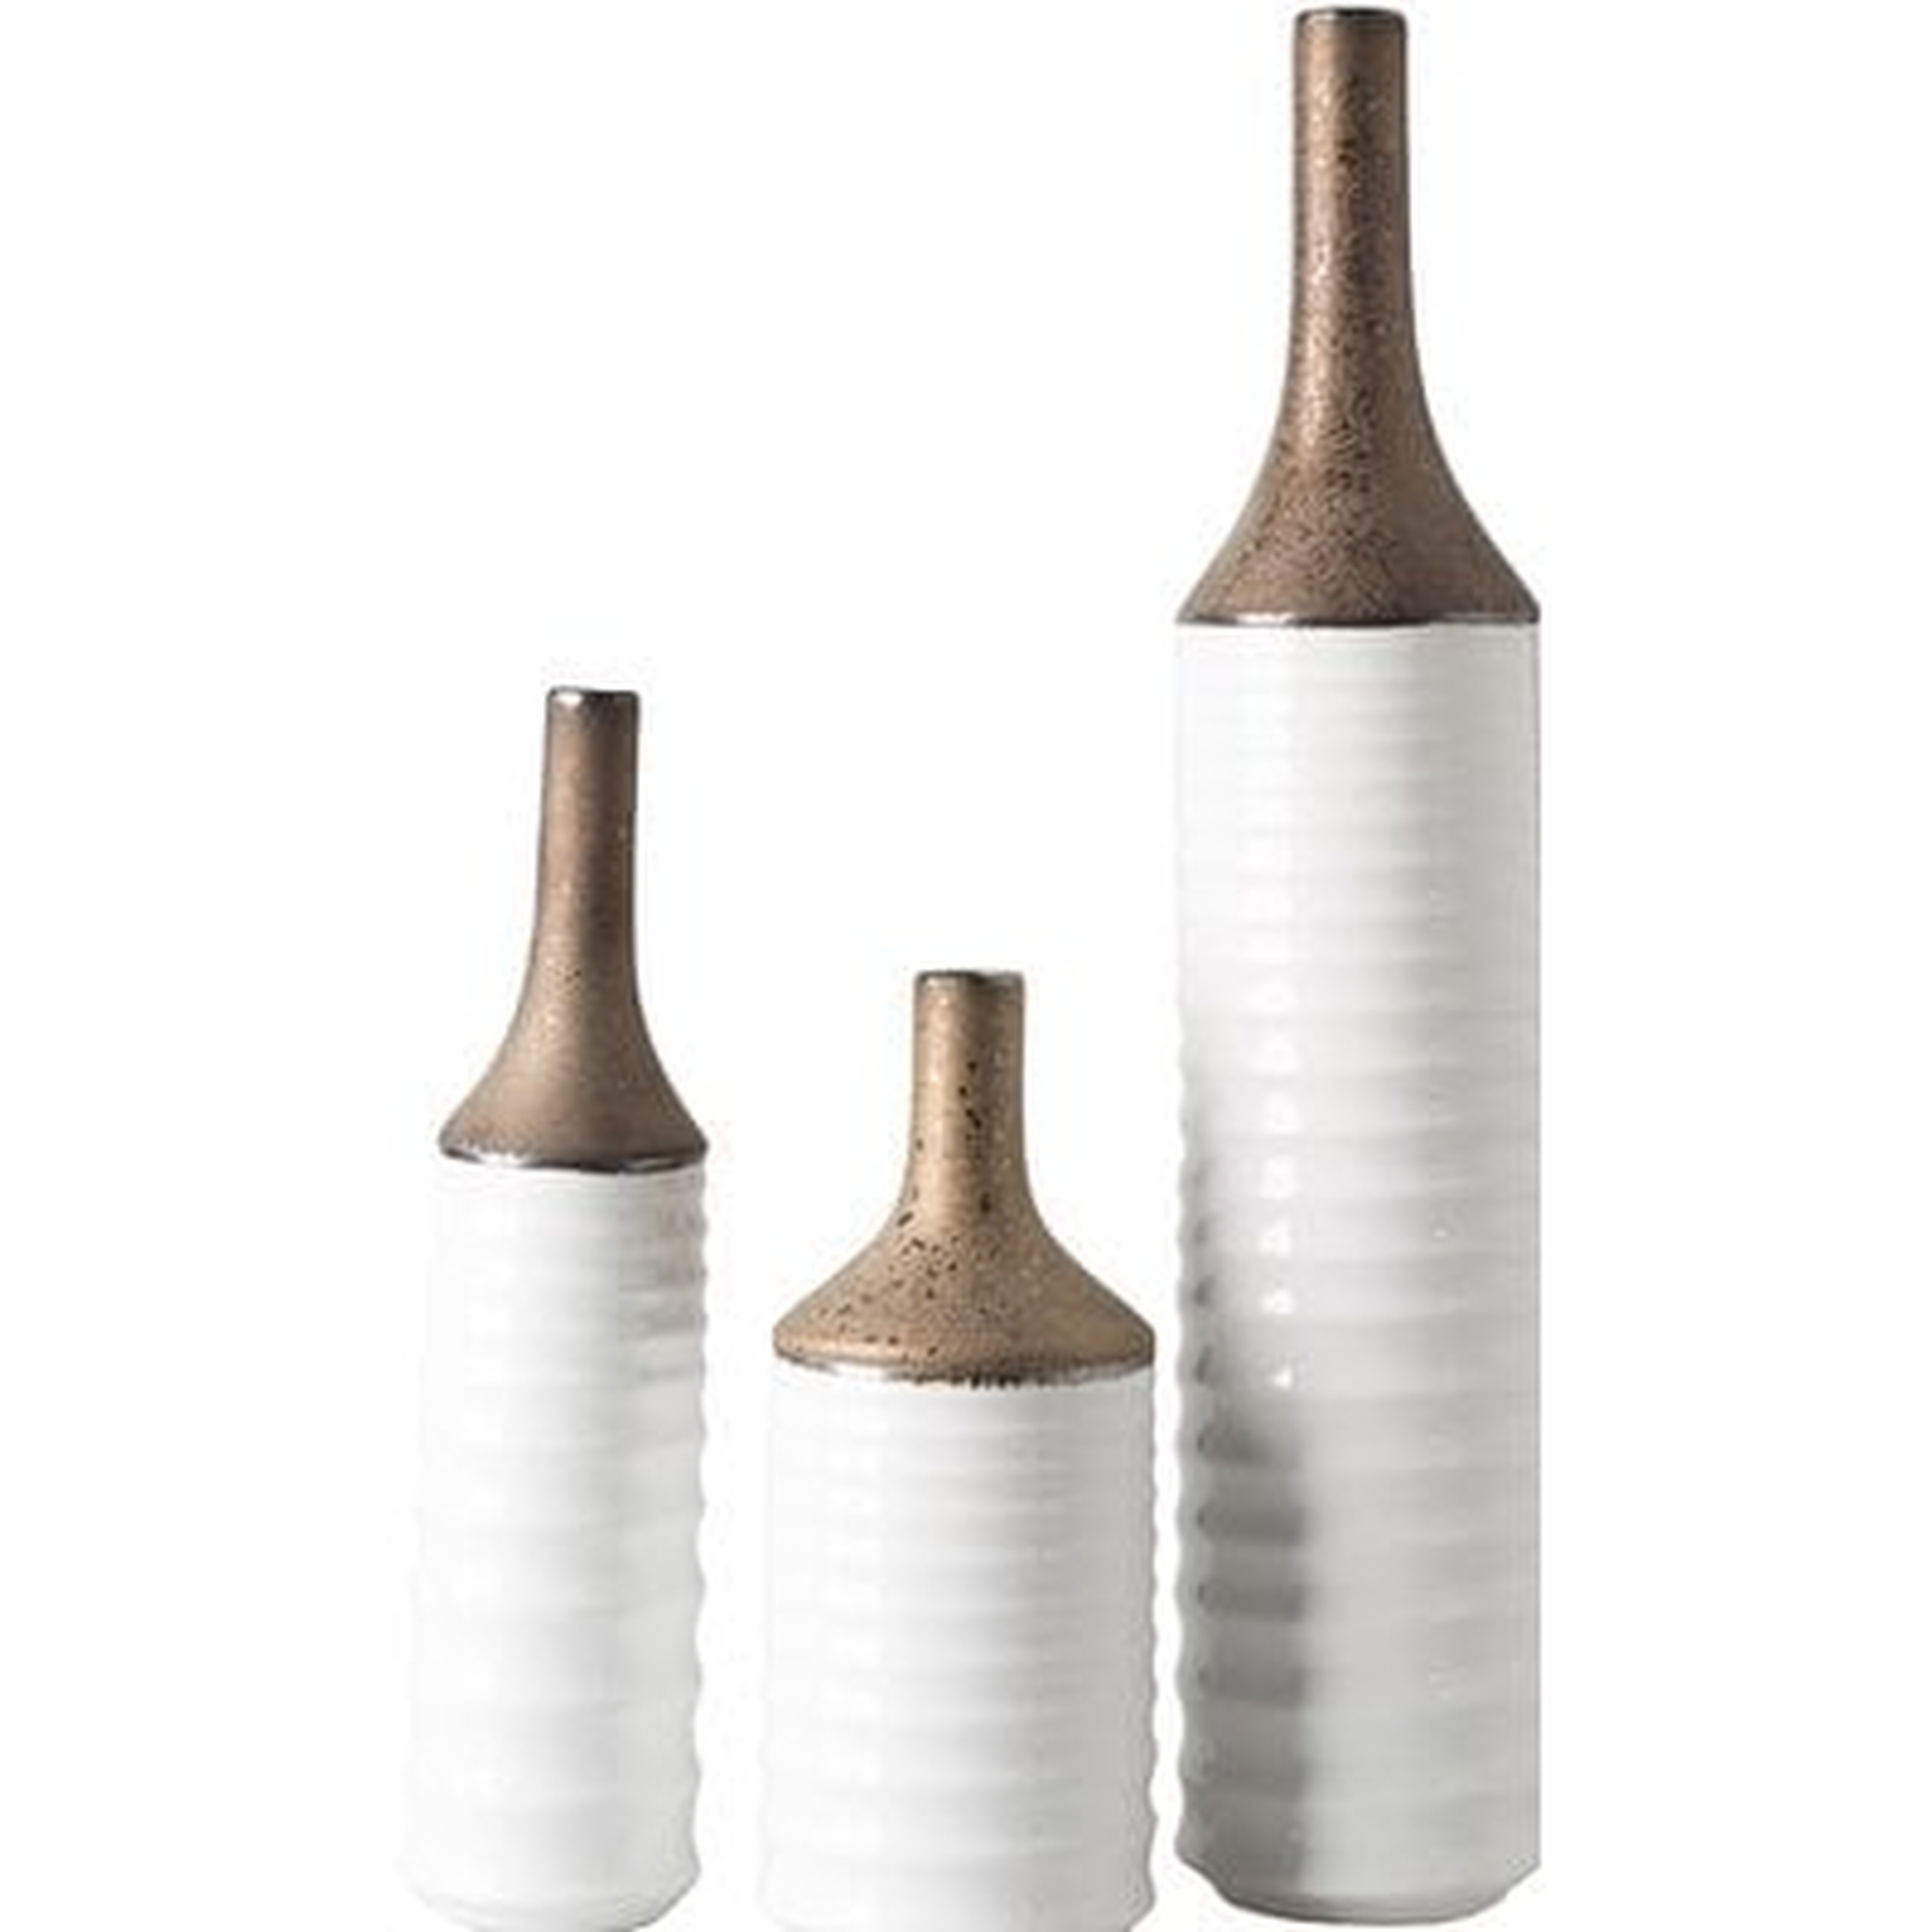 3 Piece Textured Ceramic Table Vase Set - Wayfair